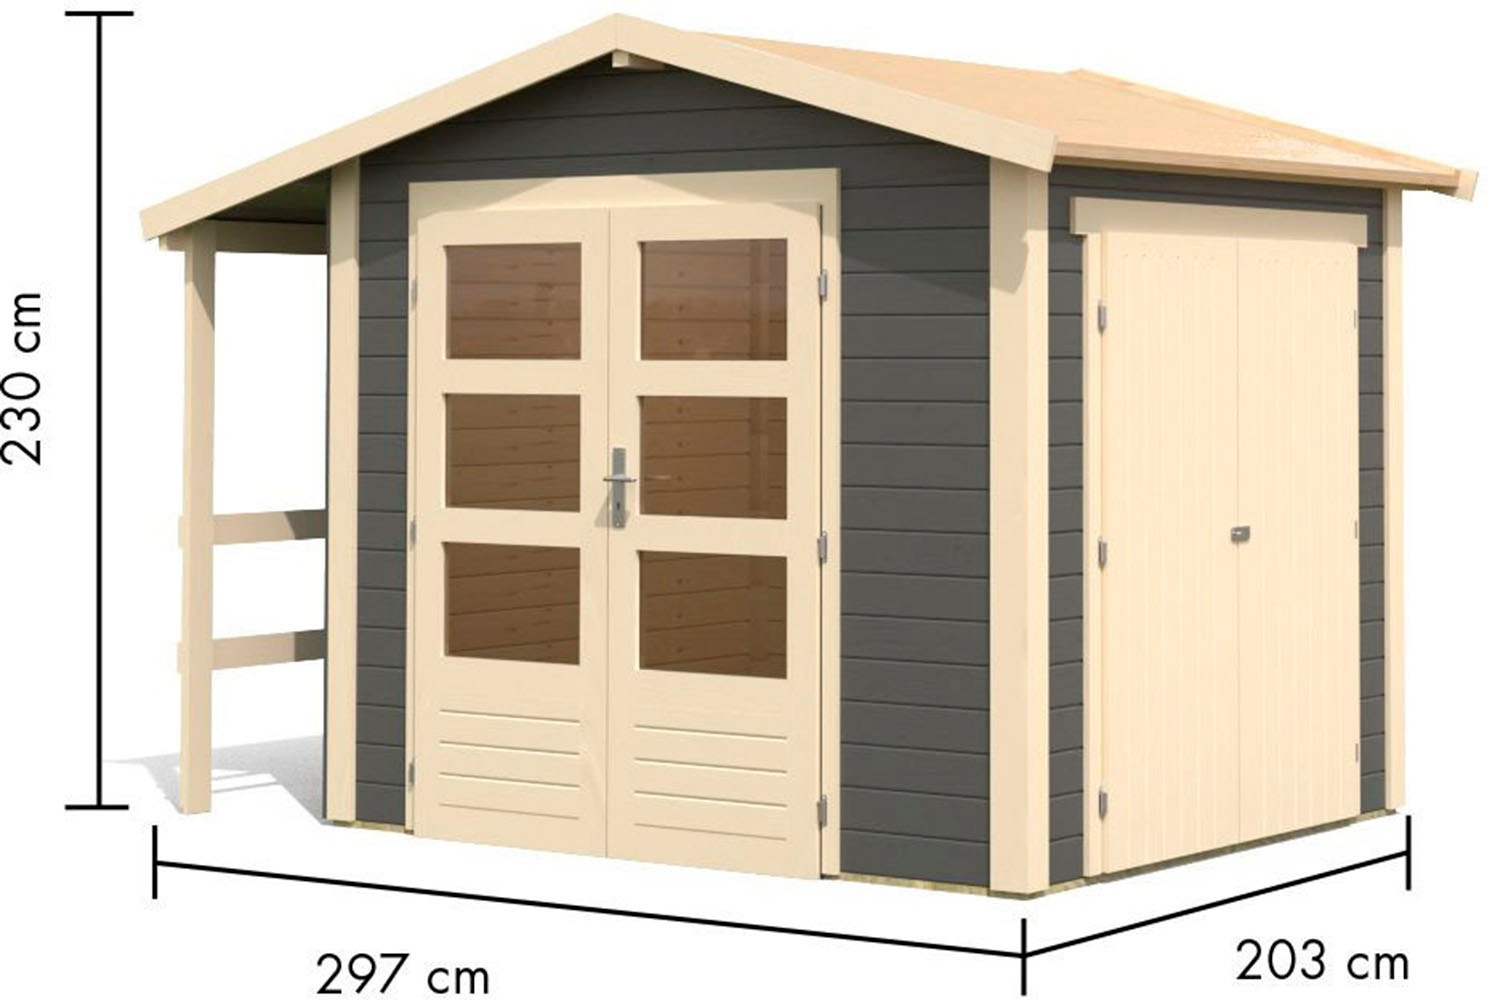 Karibu Gartenhaus »28mm Multifunktionshaus Satteldach«, naturbelassen oder terragrau